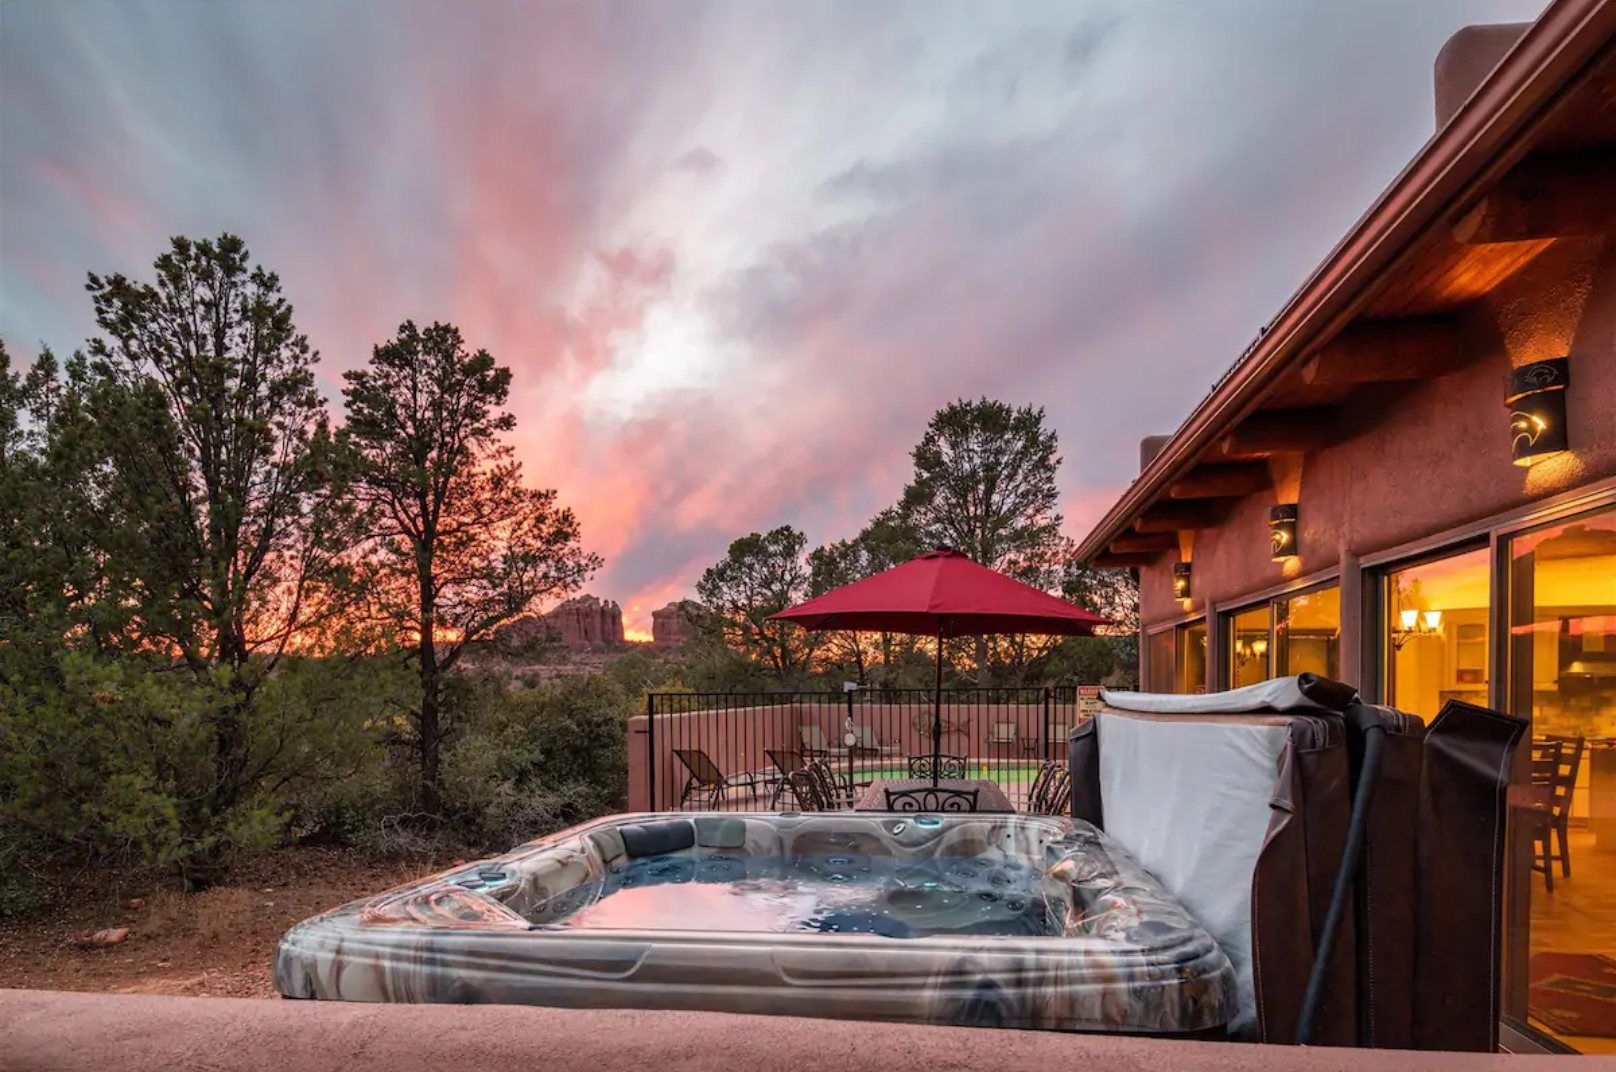 The Best Airbnbs in Sedona AZ